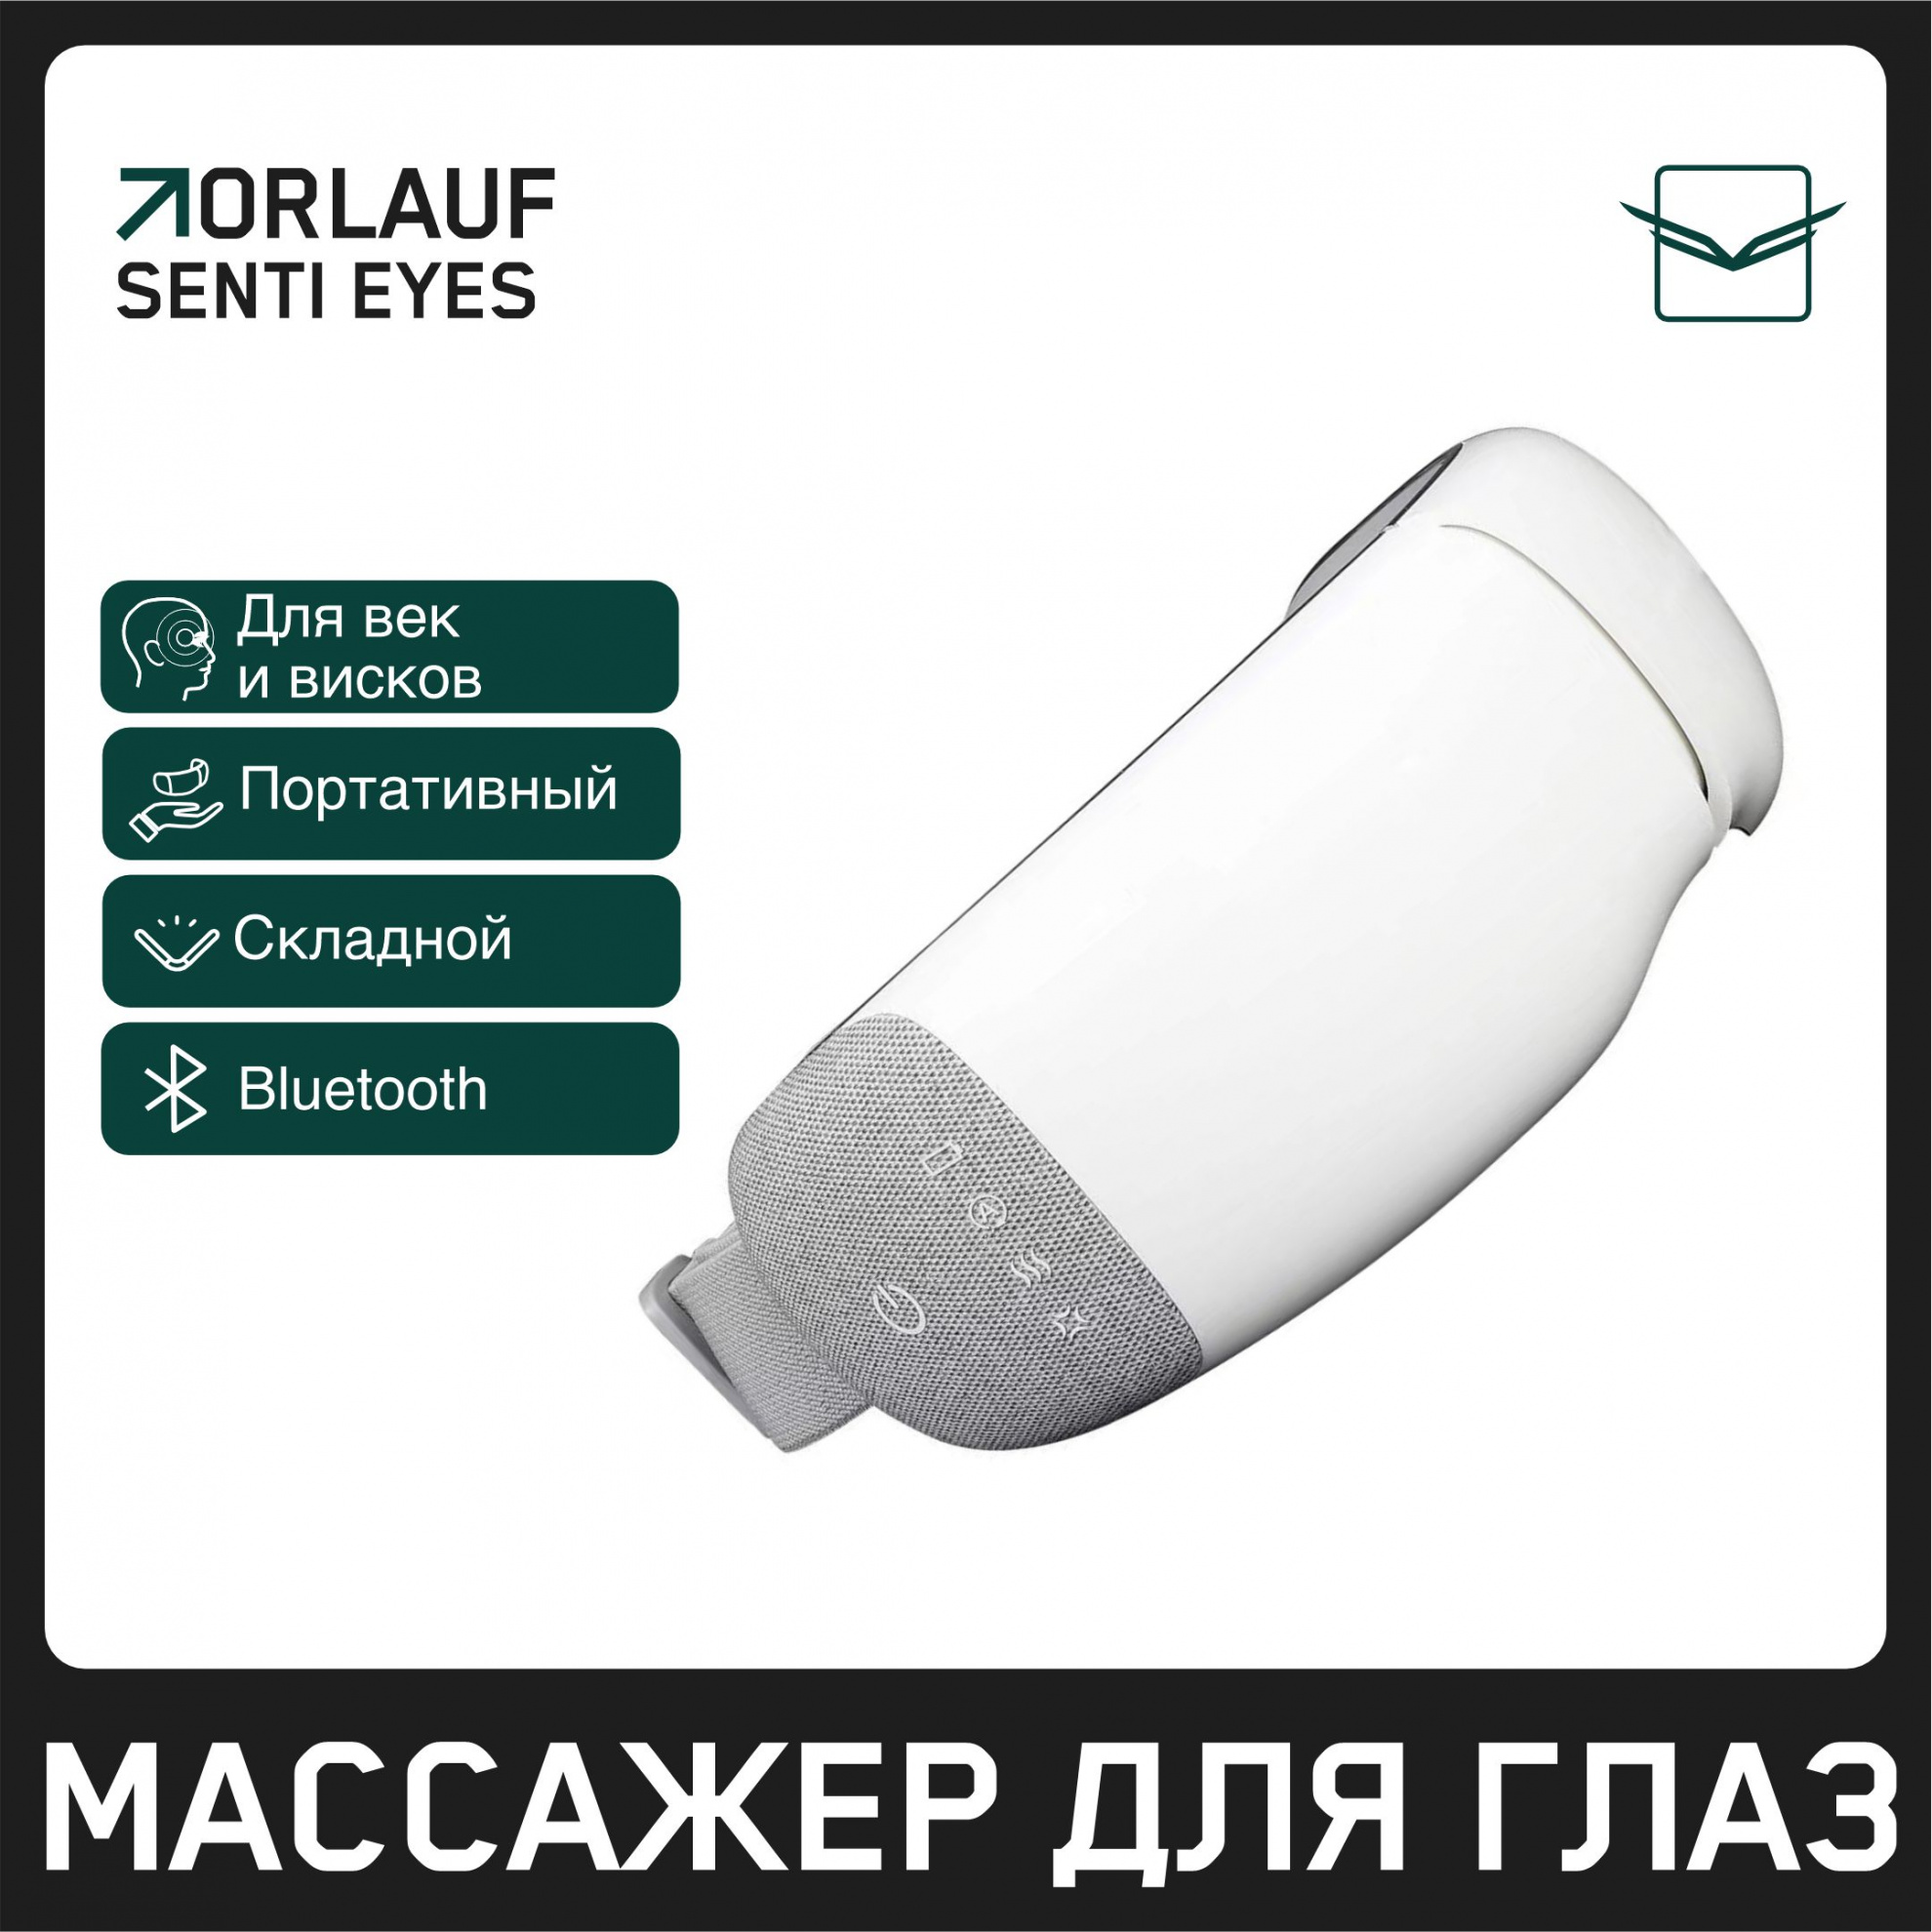 Senti Eyes в Тольятти по цене 9400 ₽ в категории каталог Orlauf